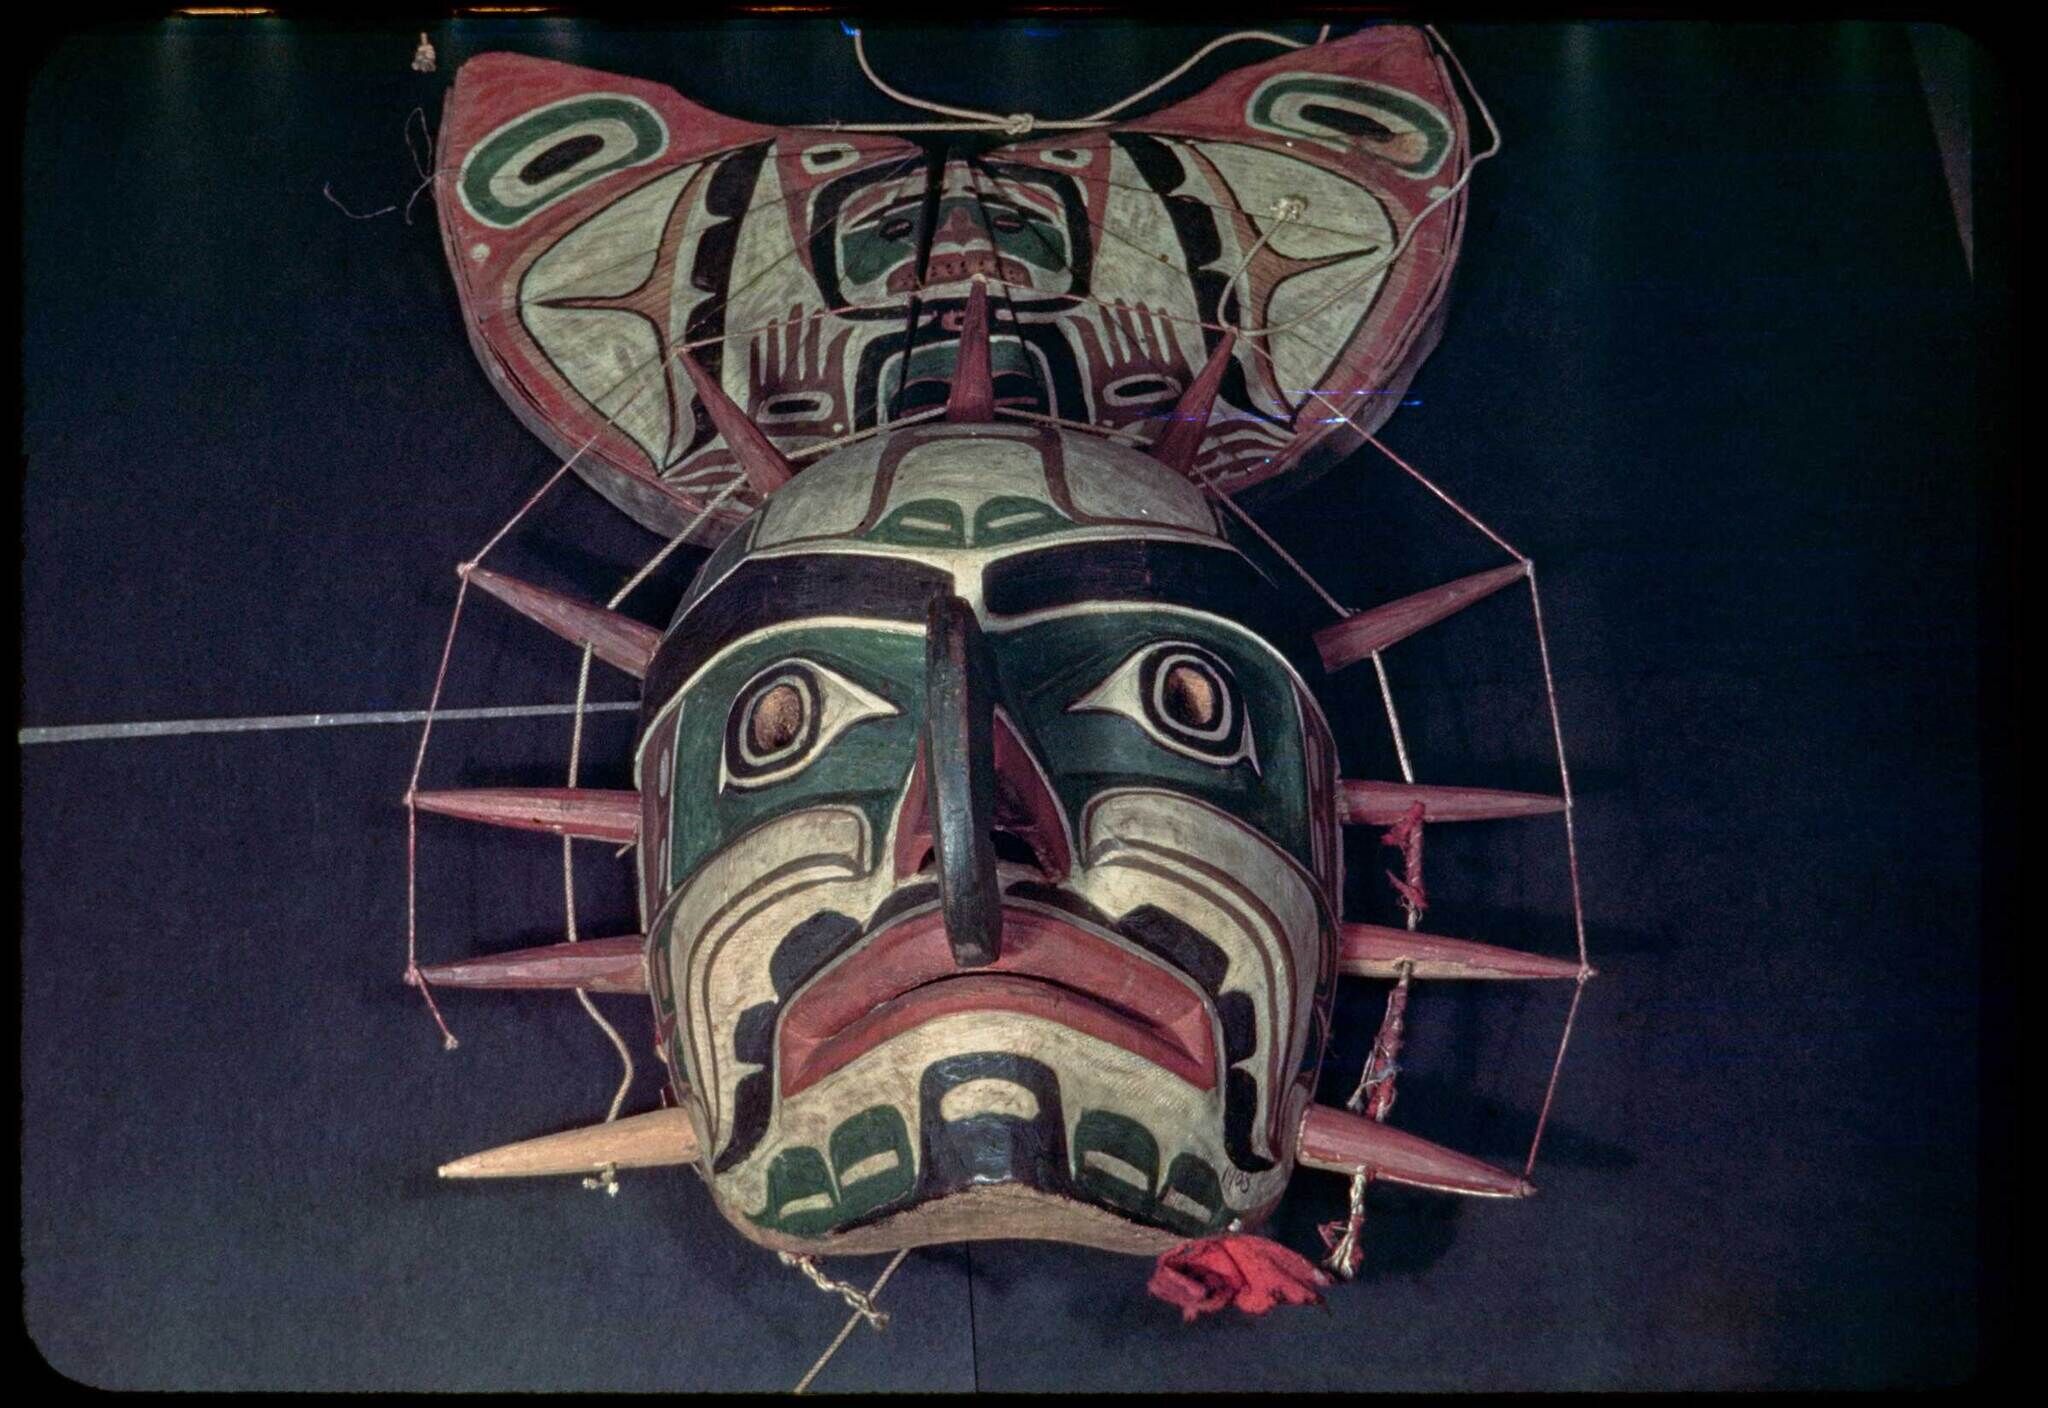 A photograph of a decorative mask.